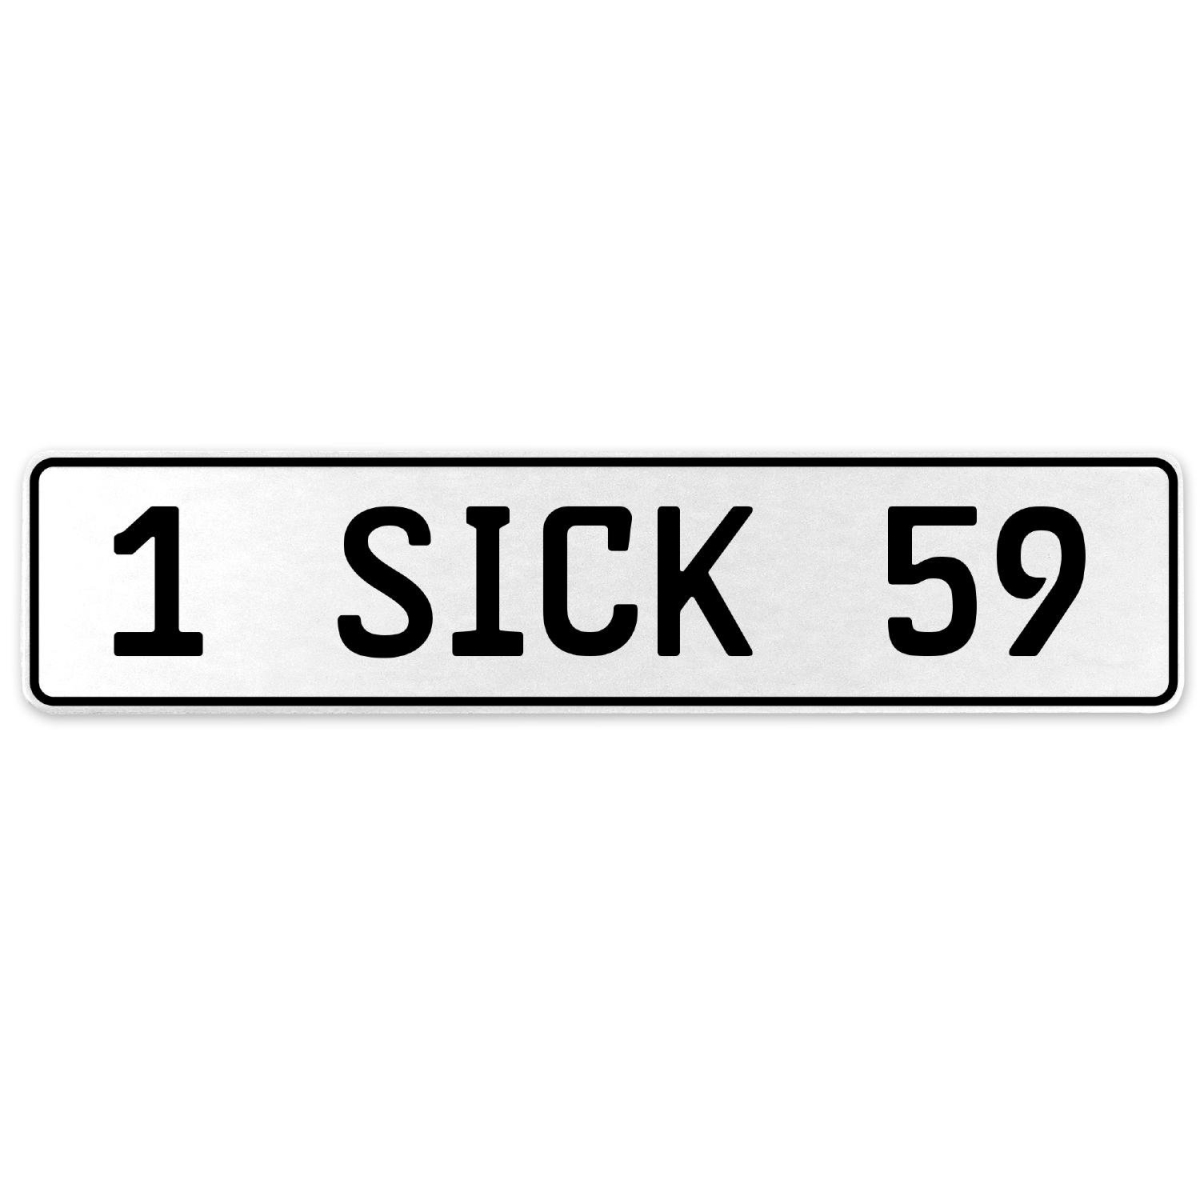 554458 1 Sick 59 - White Aluminum Street Sign Mancave Euro Plate Name Door Sign Wall